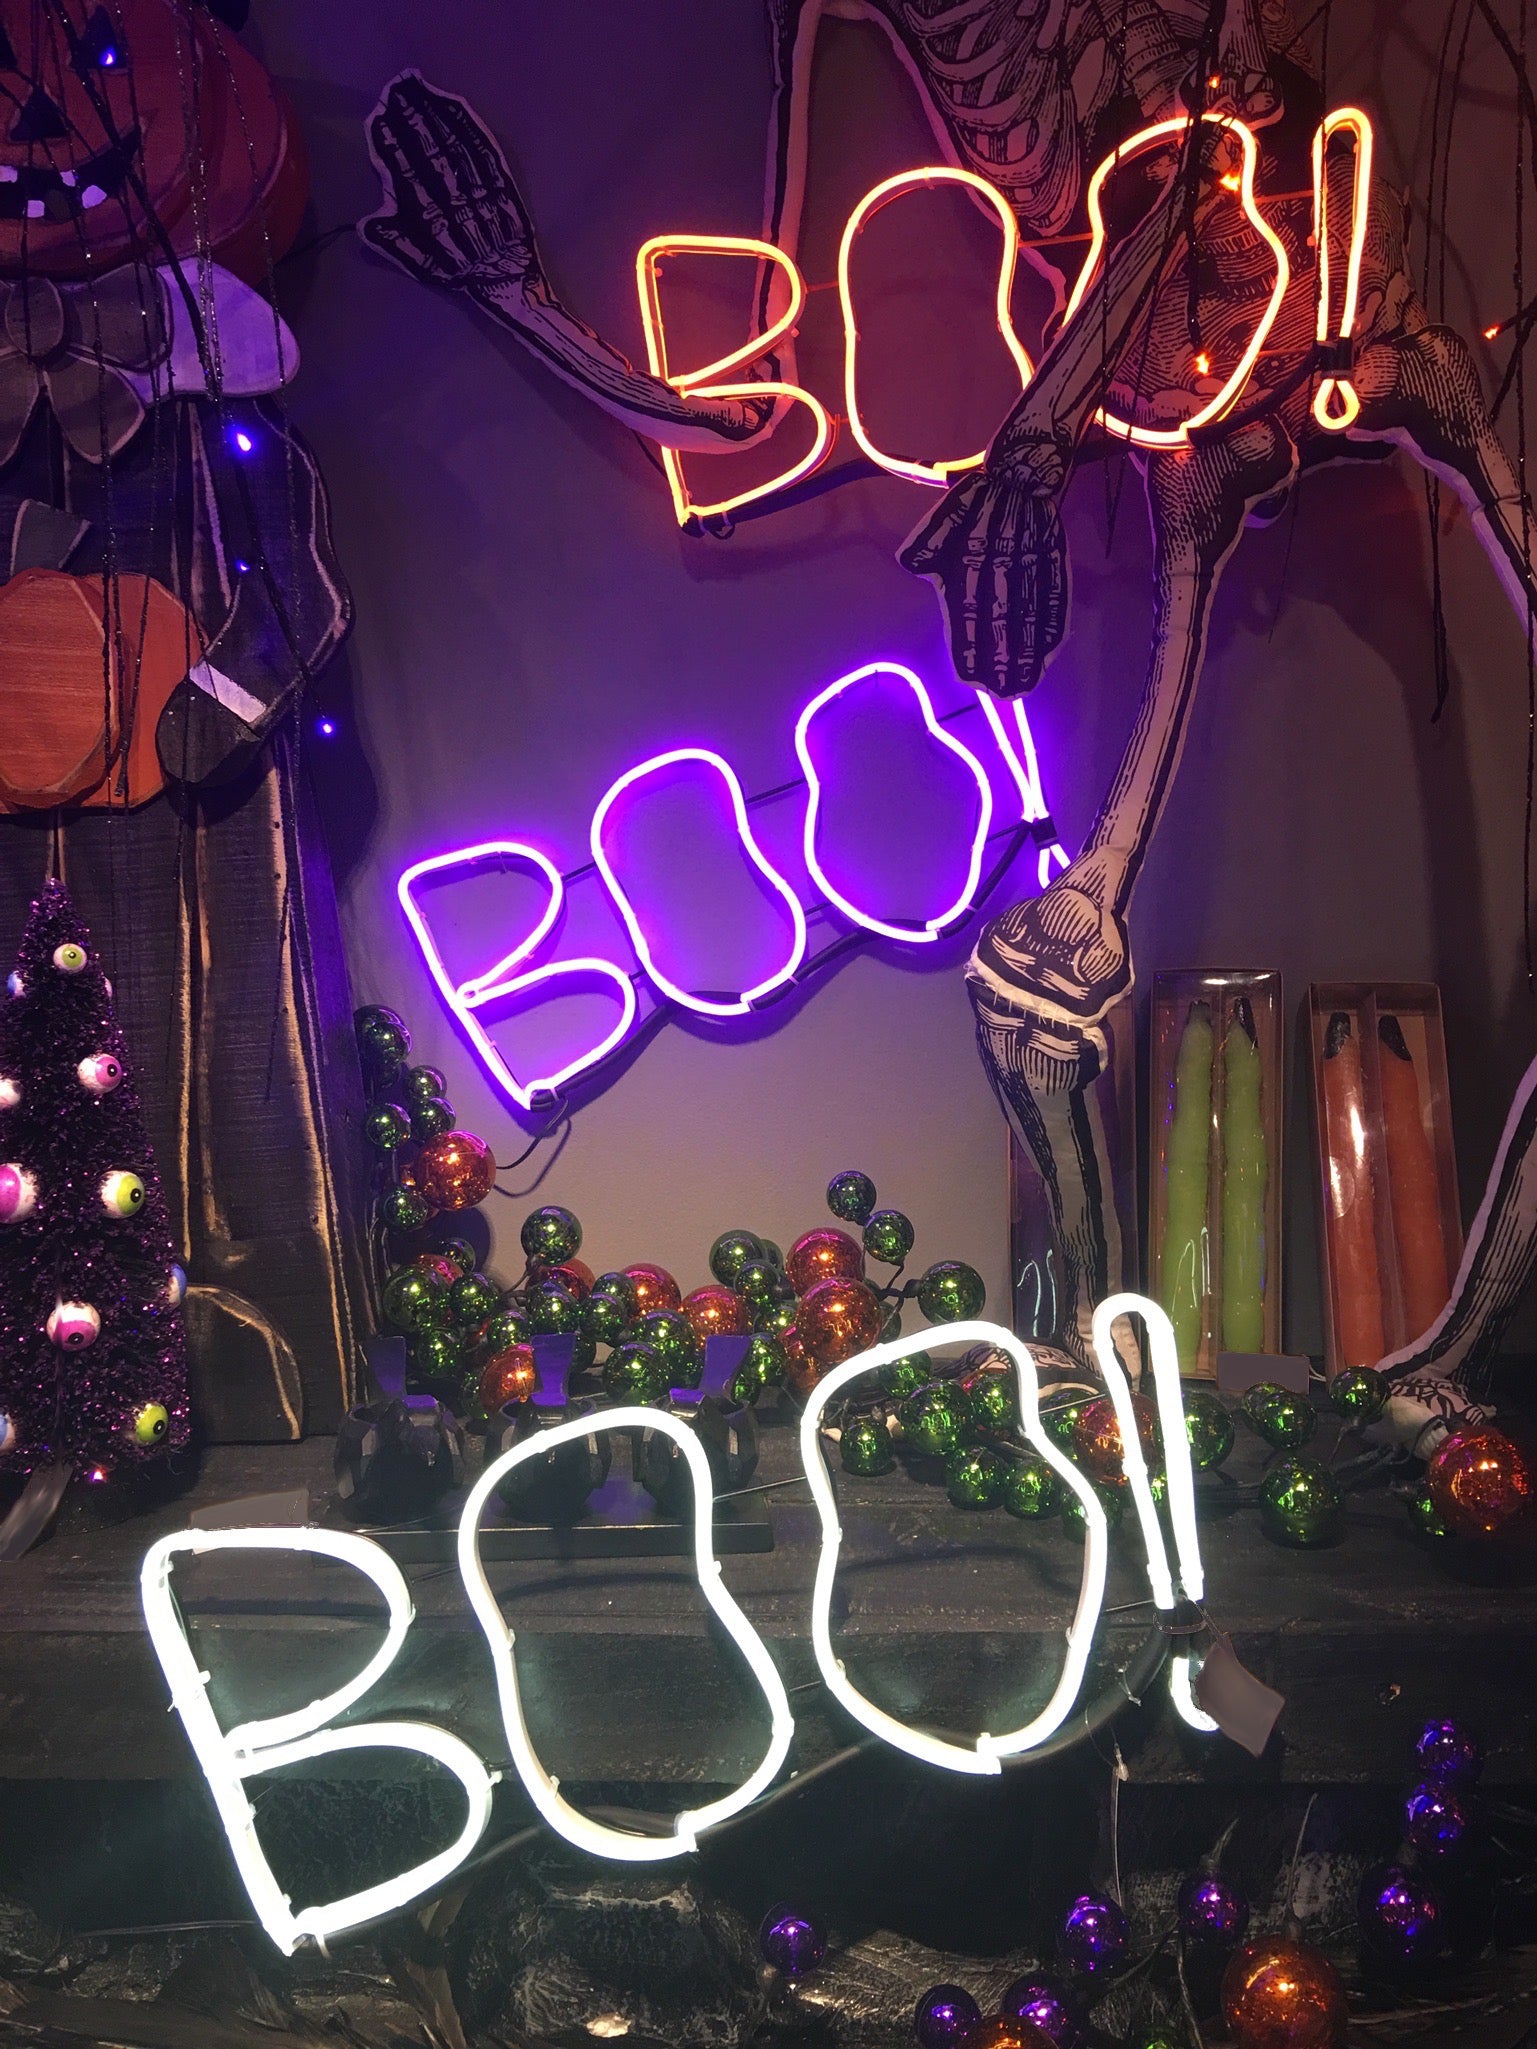 BOO LED "Neon Look" Sign - Halloween Lights